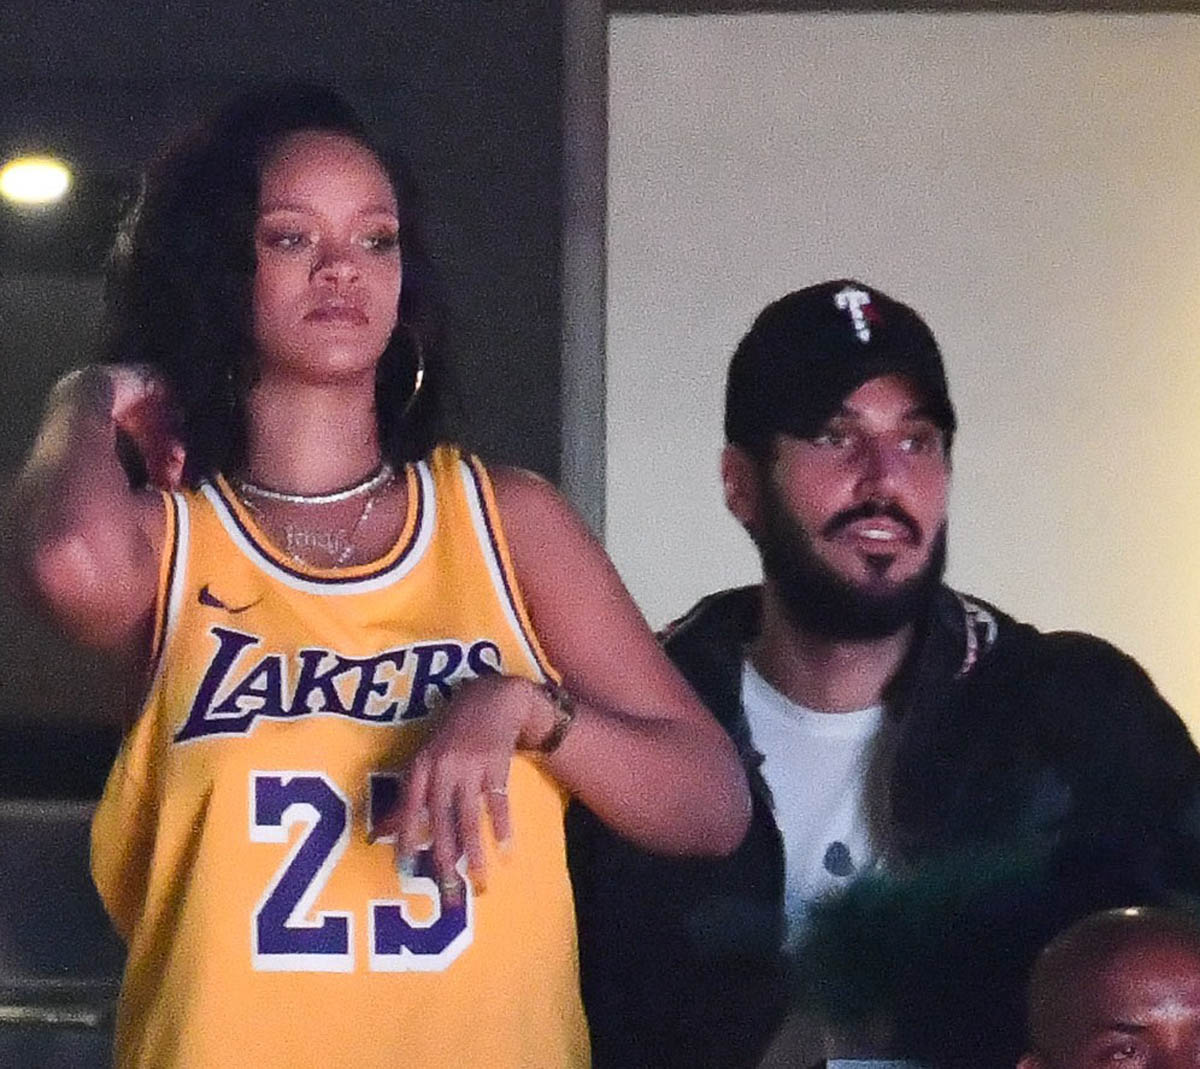 Rihanna eats french fries at LA Lakers basketball game in LA